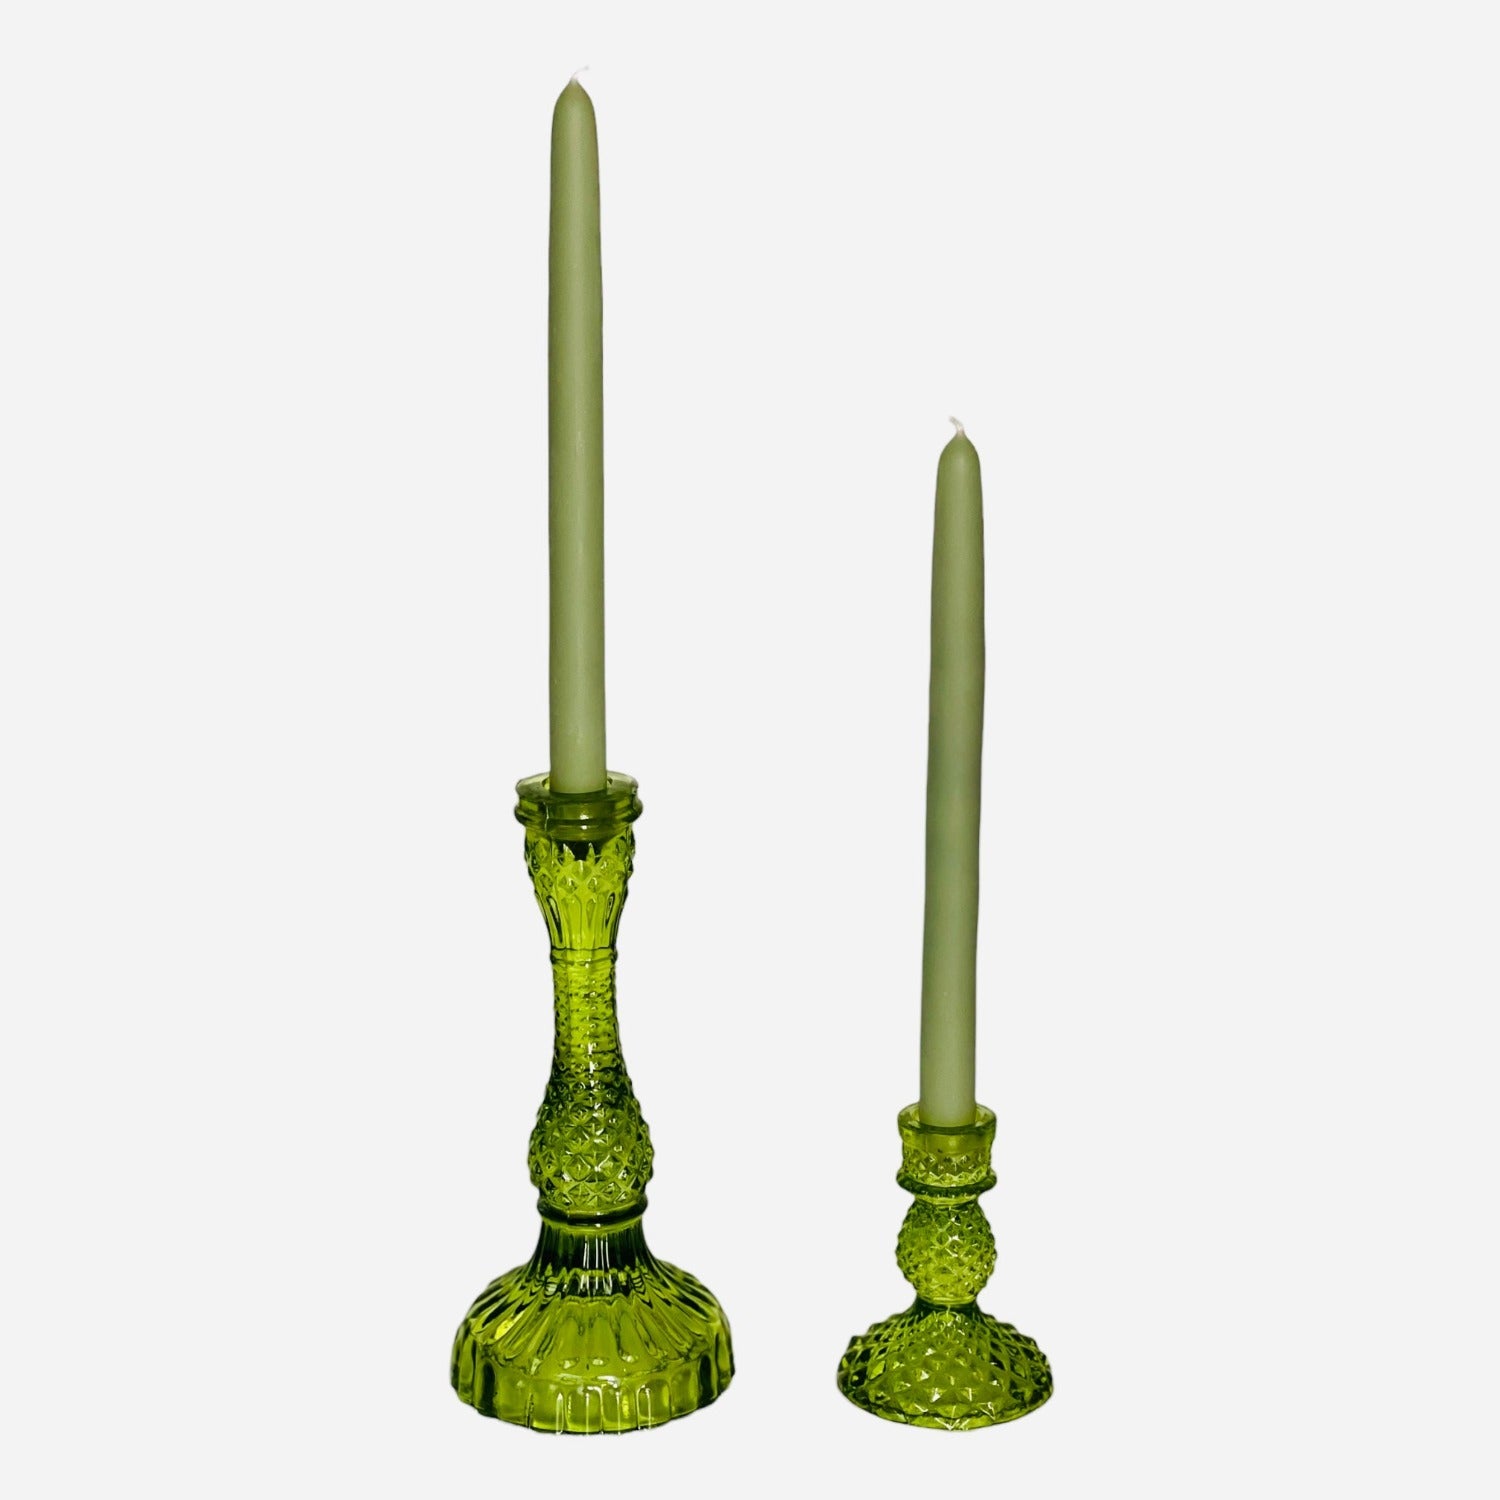 Tall Vintage Glass Candleholder - Green